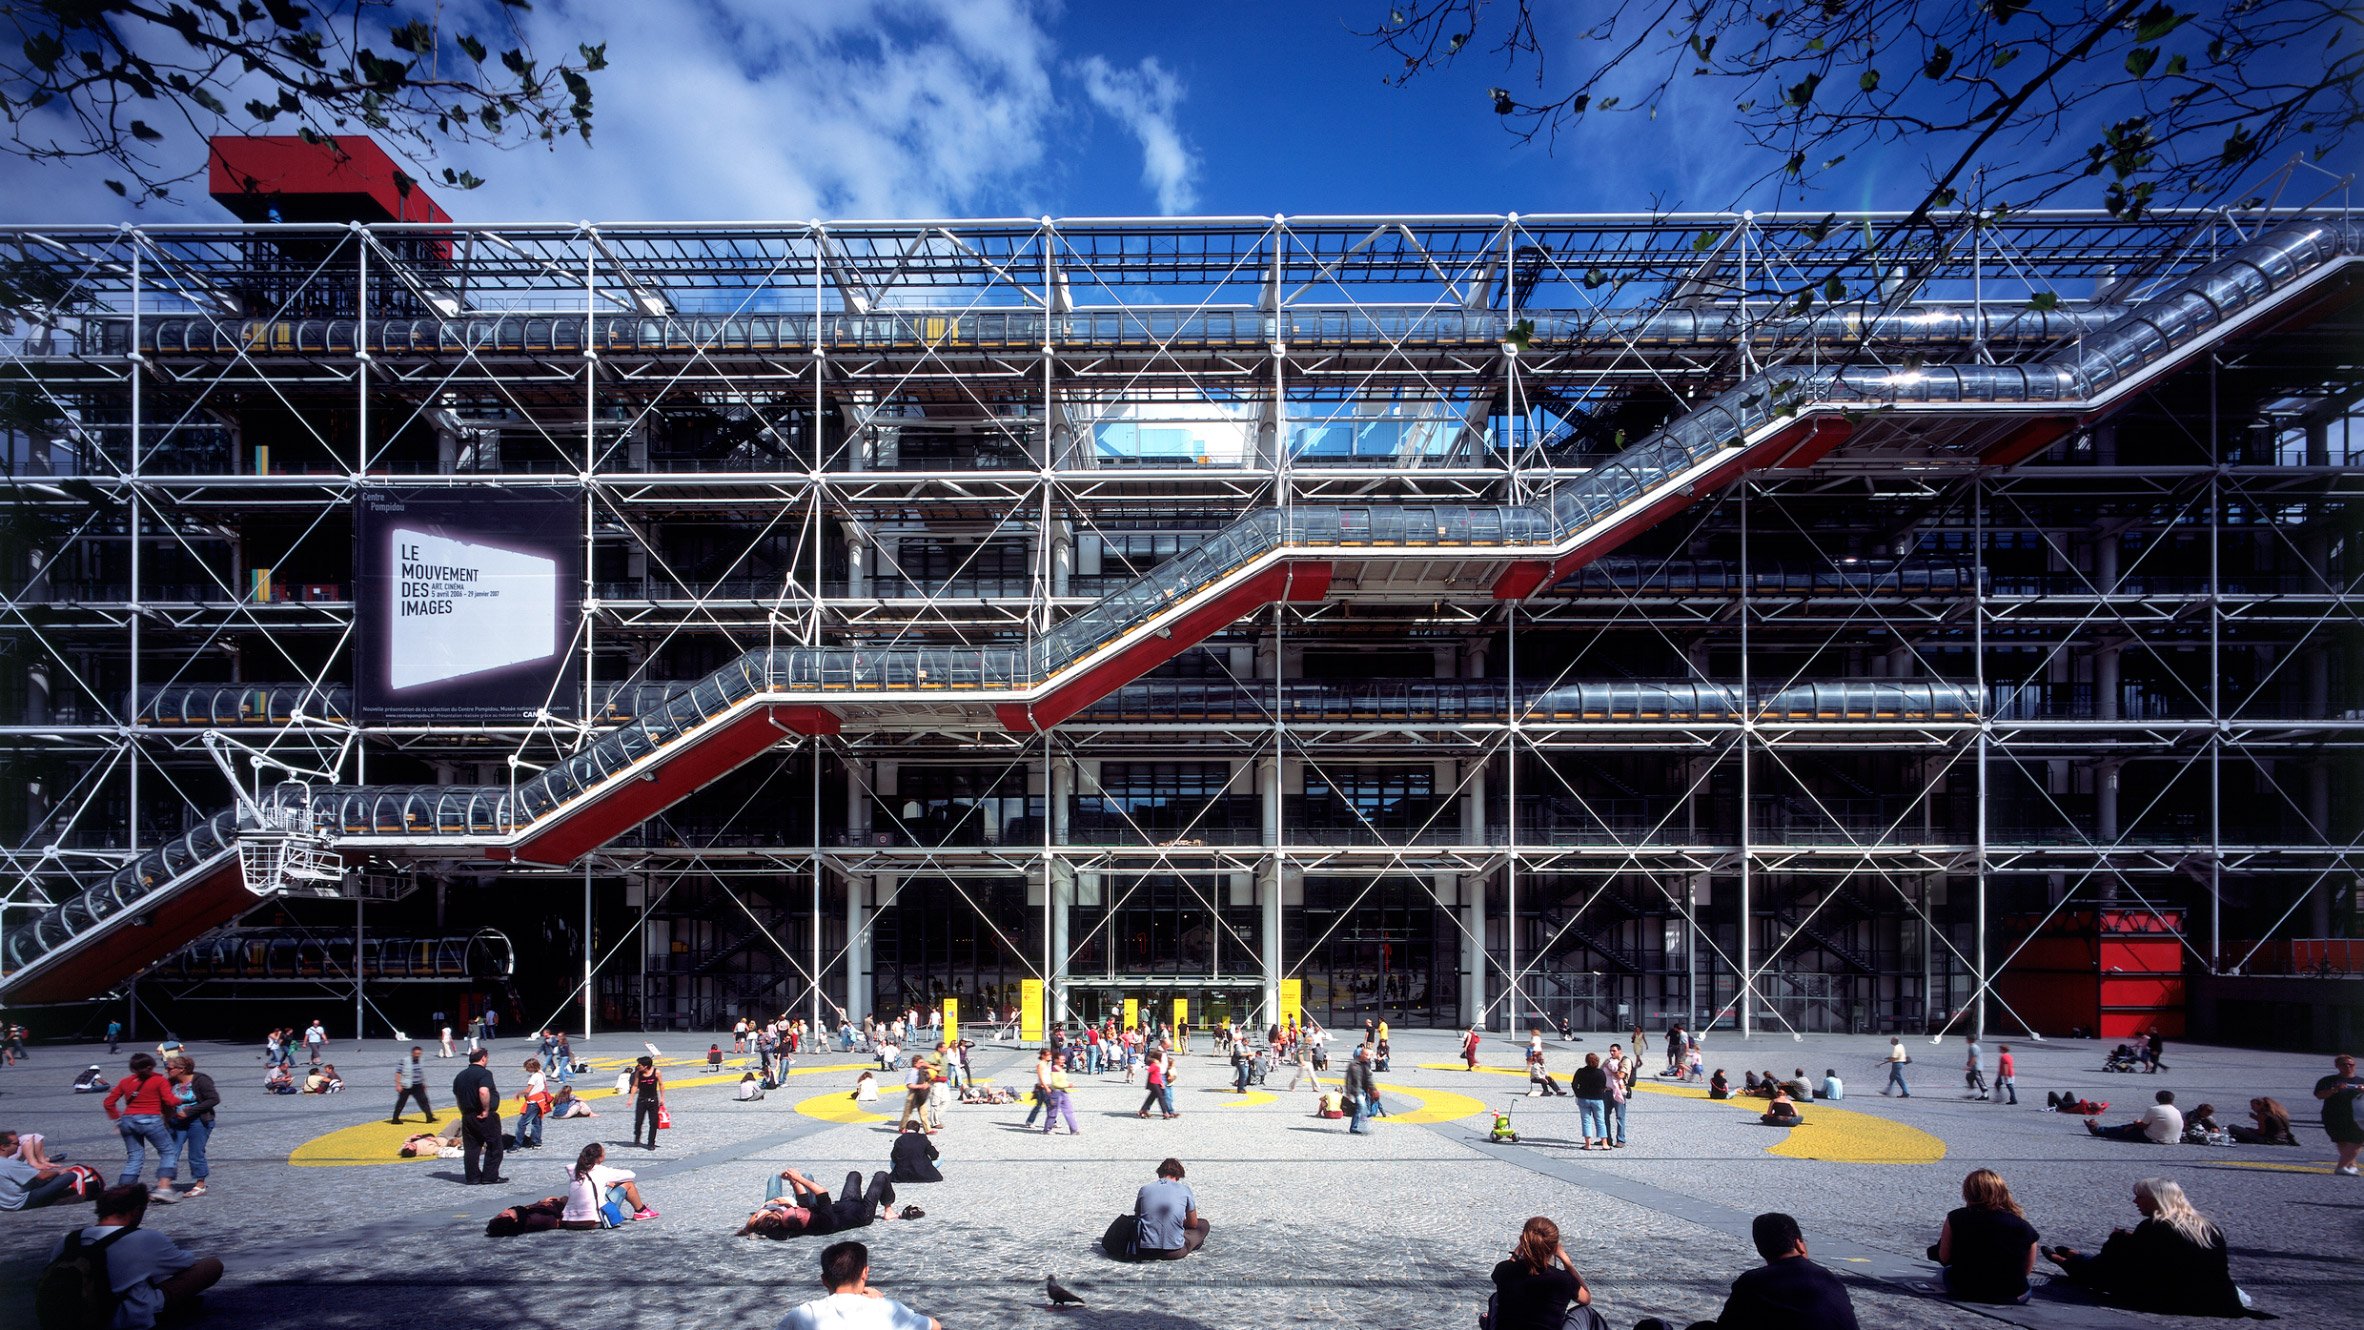 Centre Pompidou High Tech Architecture S Inside Out Landmark